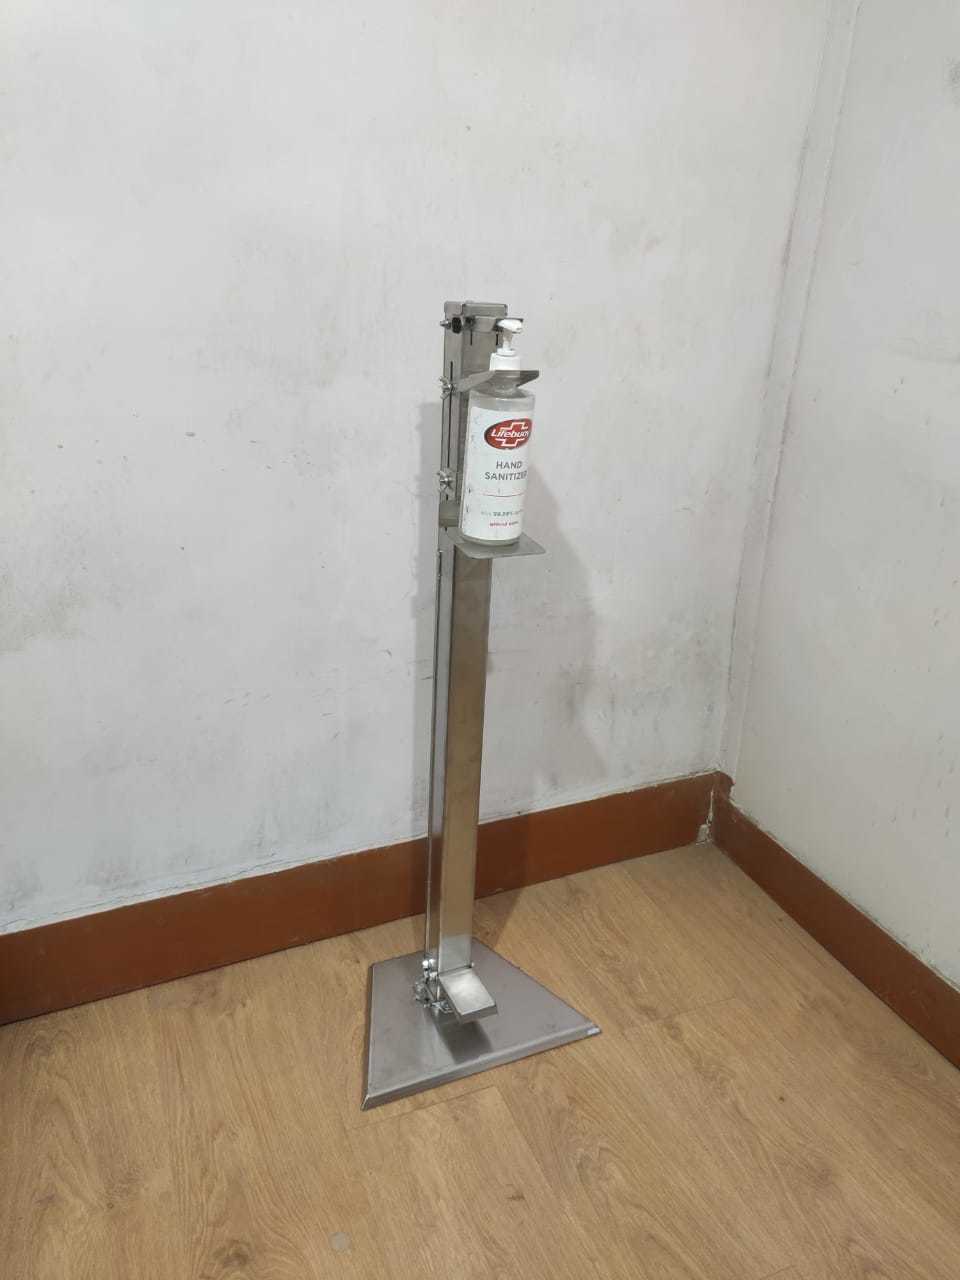 Foot Press Hand Sanitizer Stand